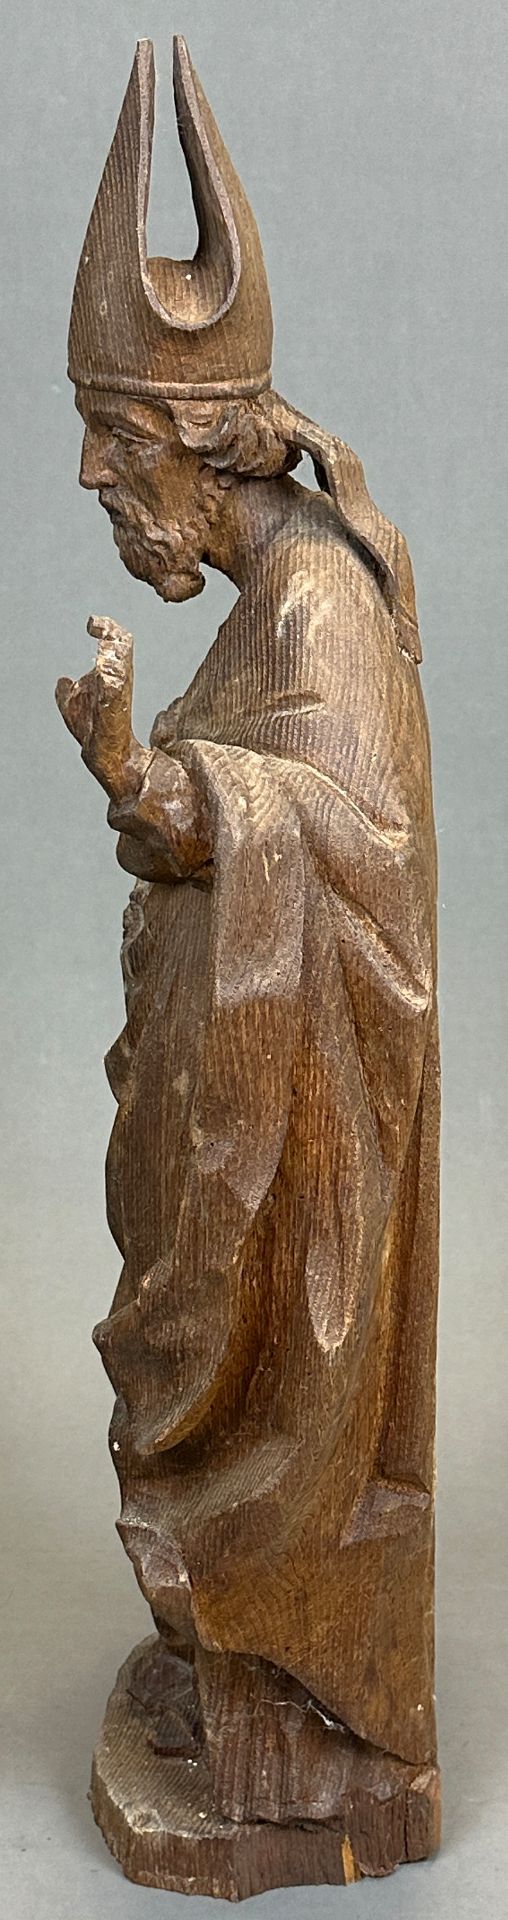 Florian SENONER (XX). Wooden figure. St Urban. Around 1900. Germany. - Image 2 of 9